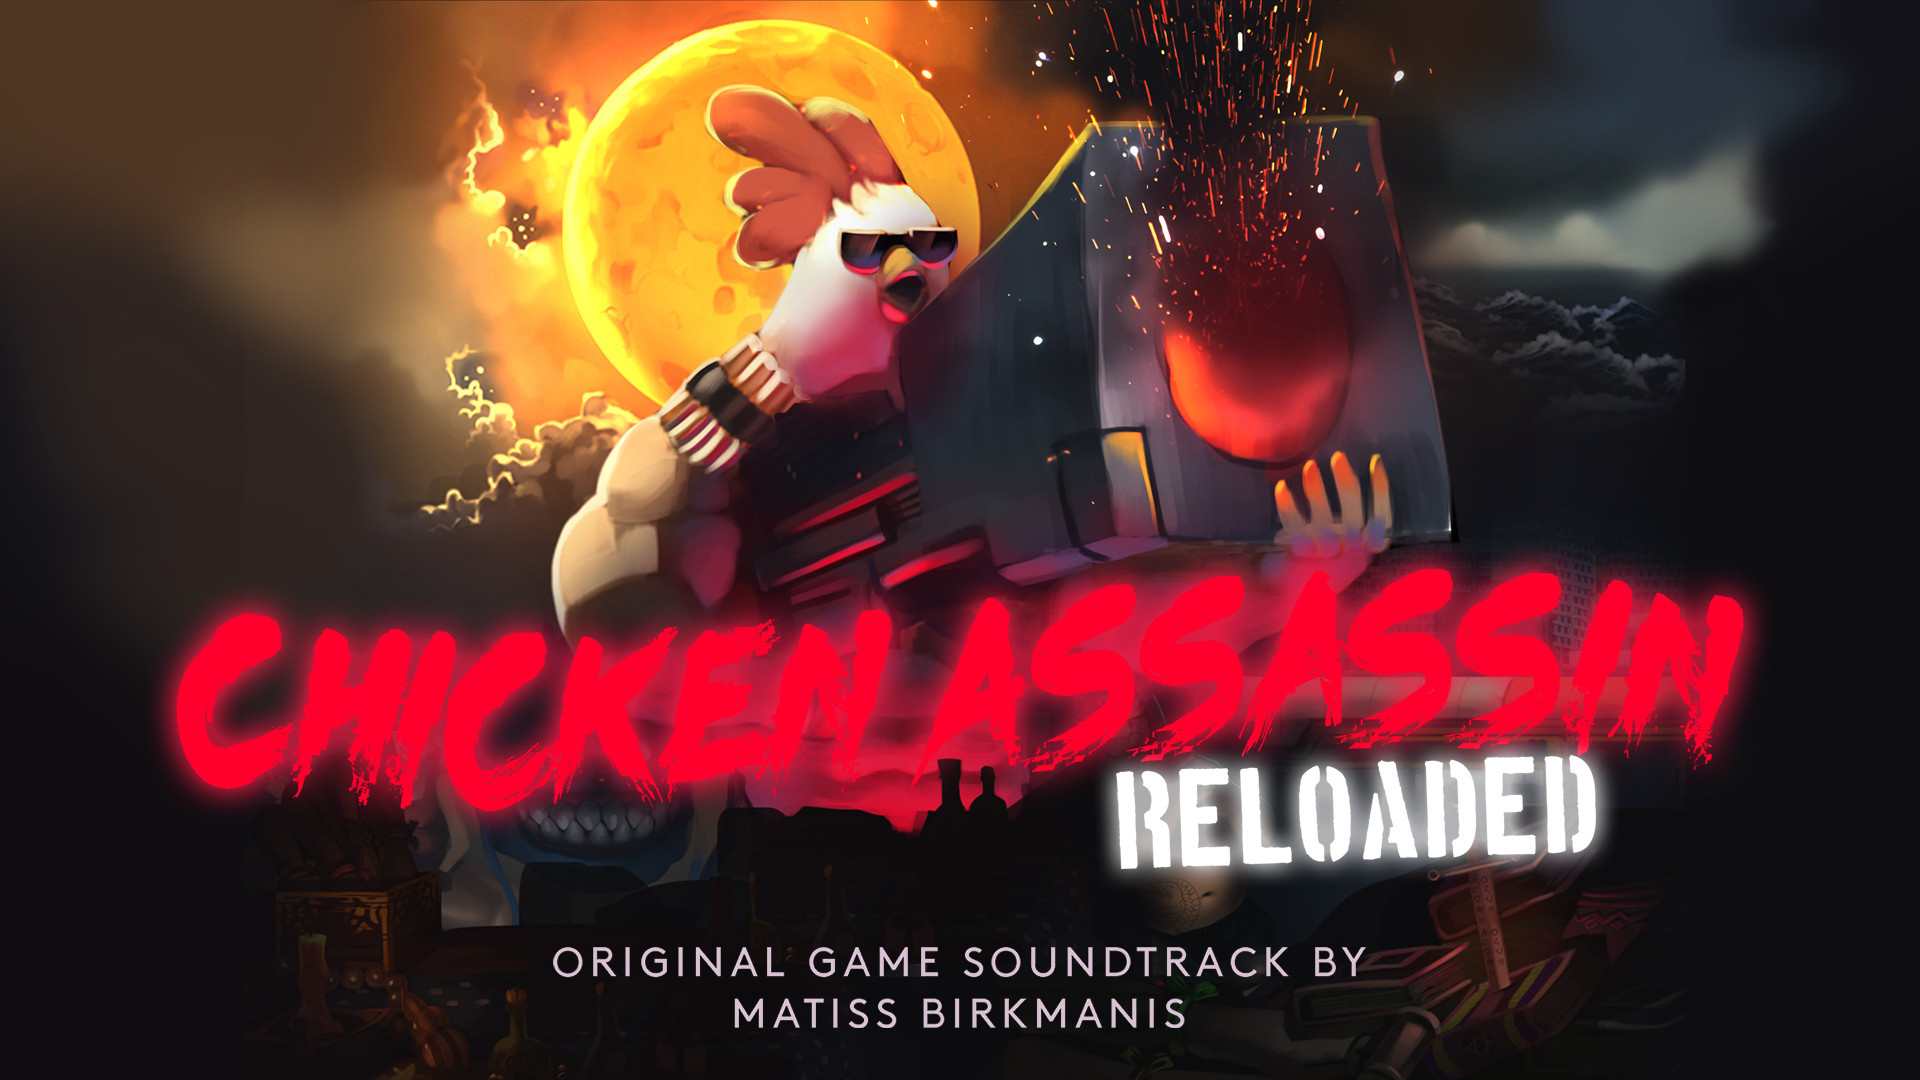 Chicken Assassin: Reloaded - Soundtrack Featured Screenshot #1